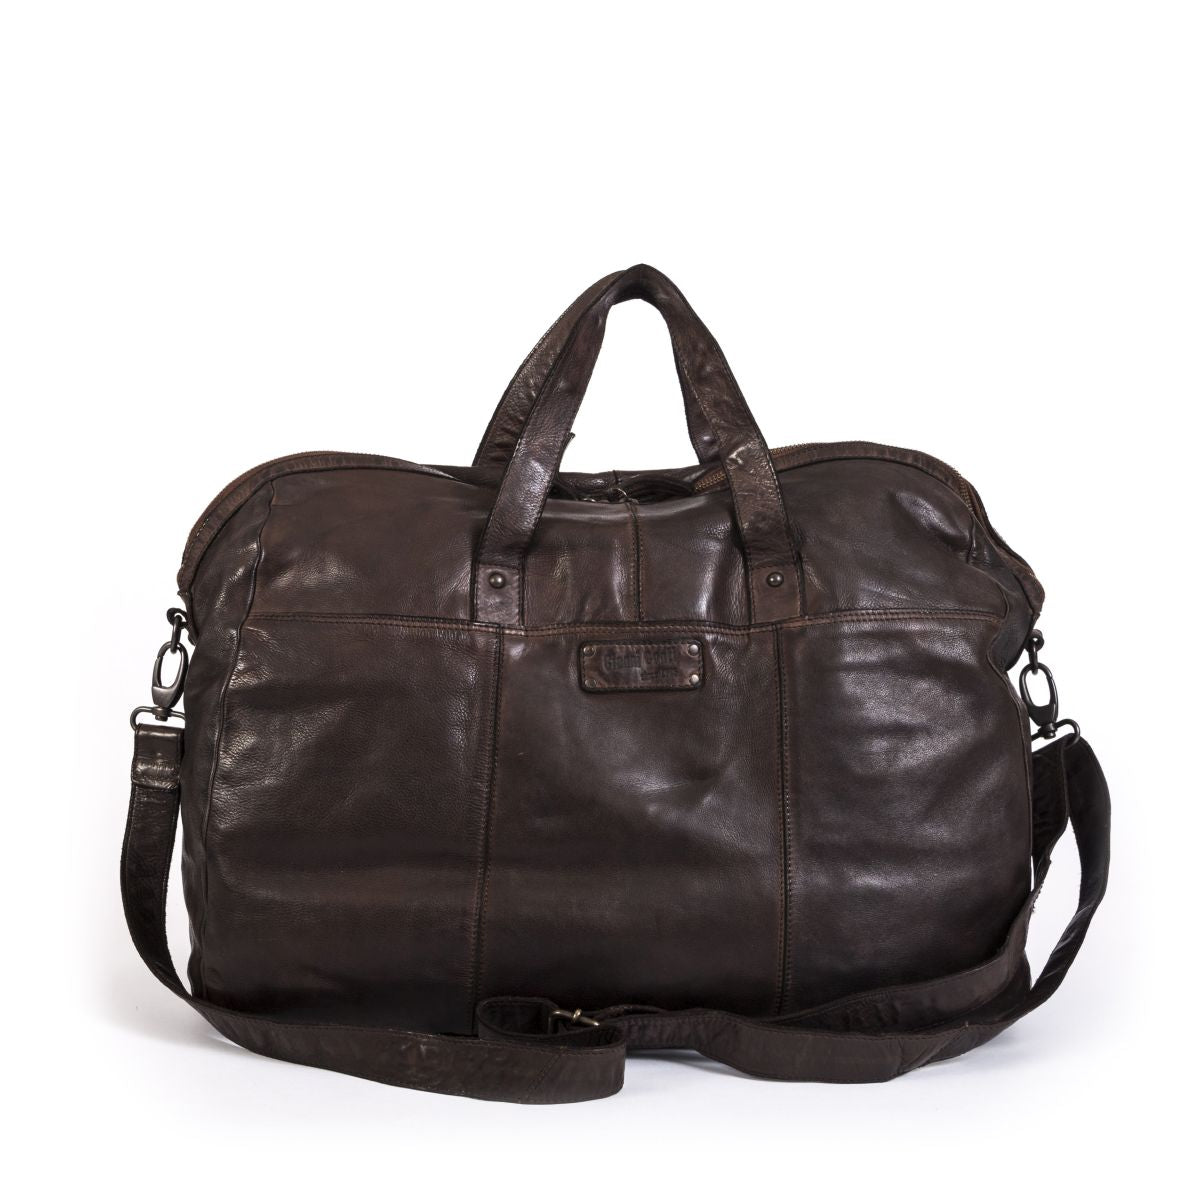 Gianni Conti Leather Travel Bag - Kyle